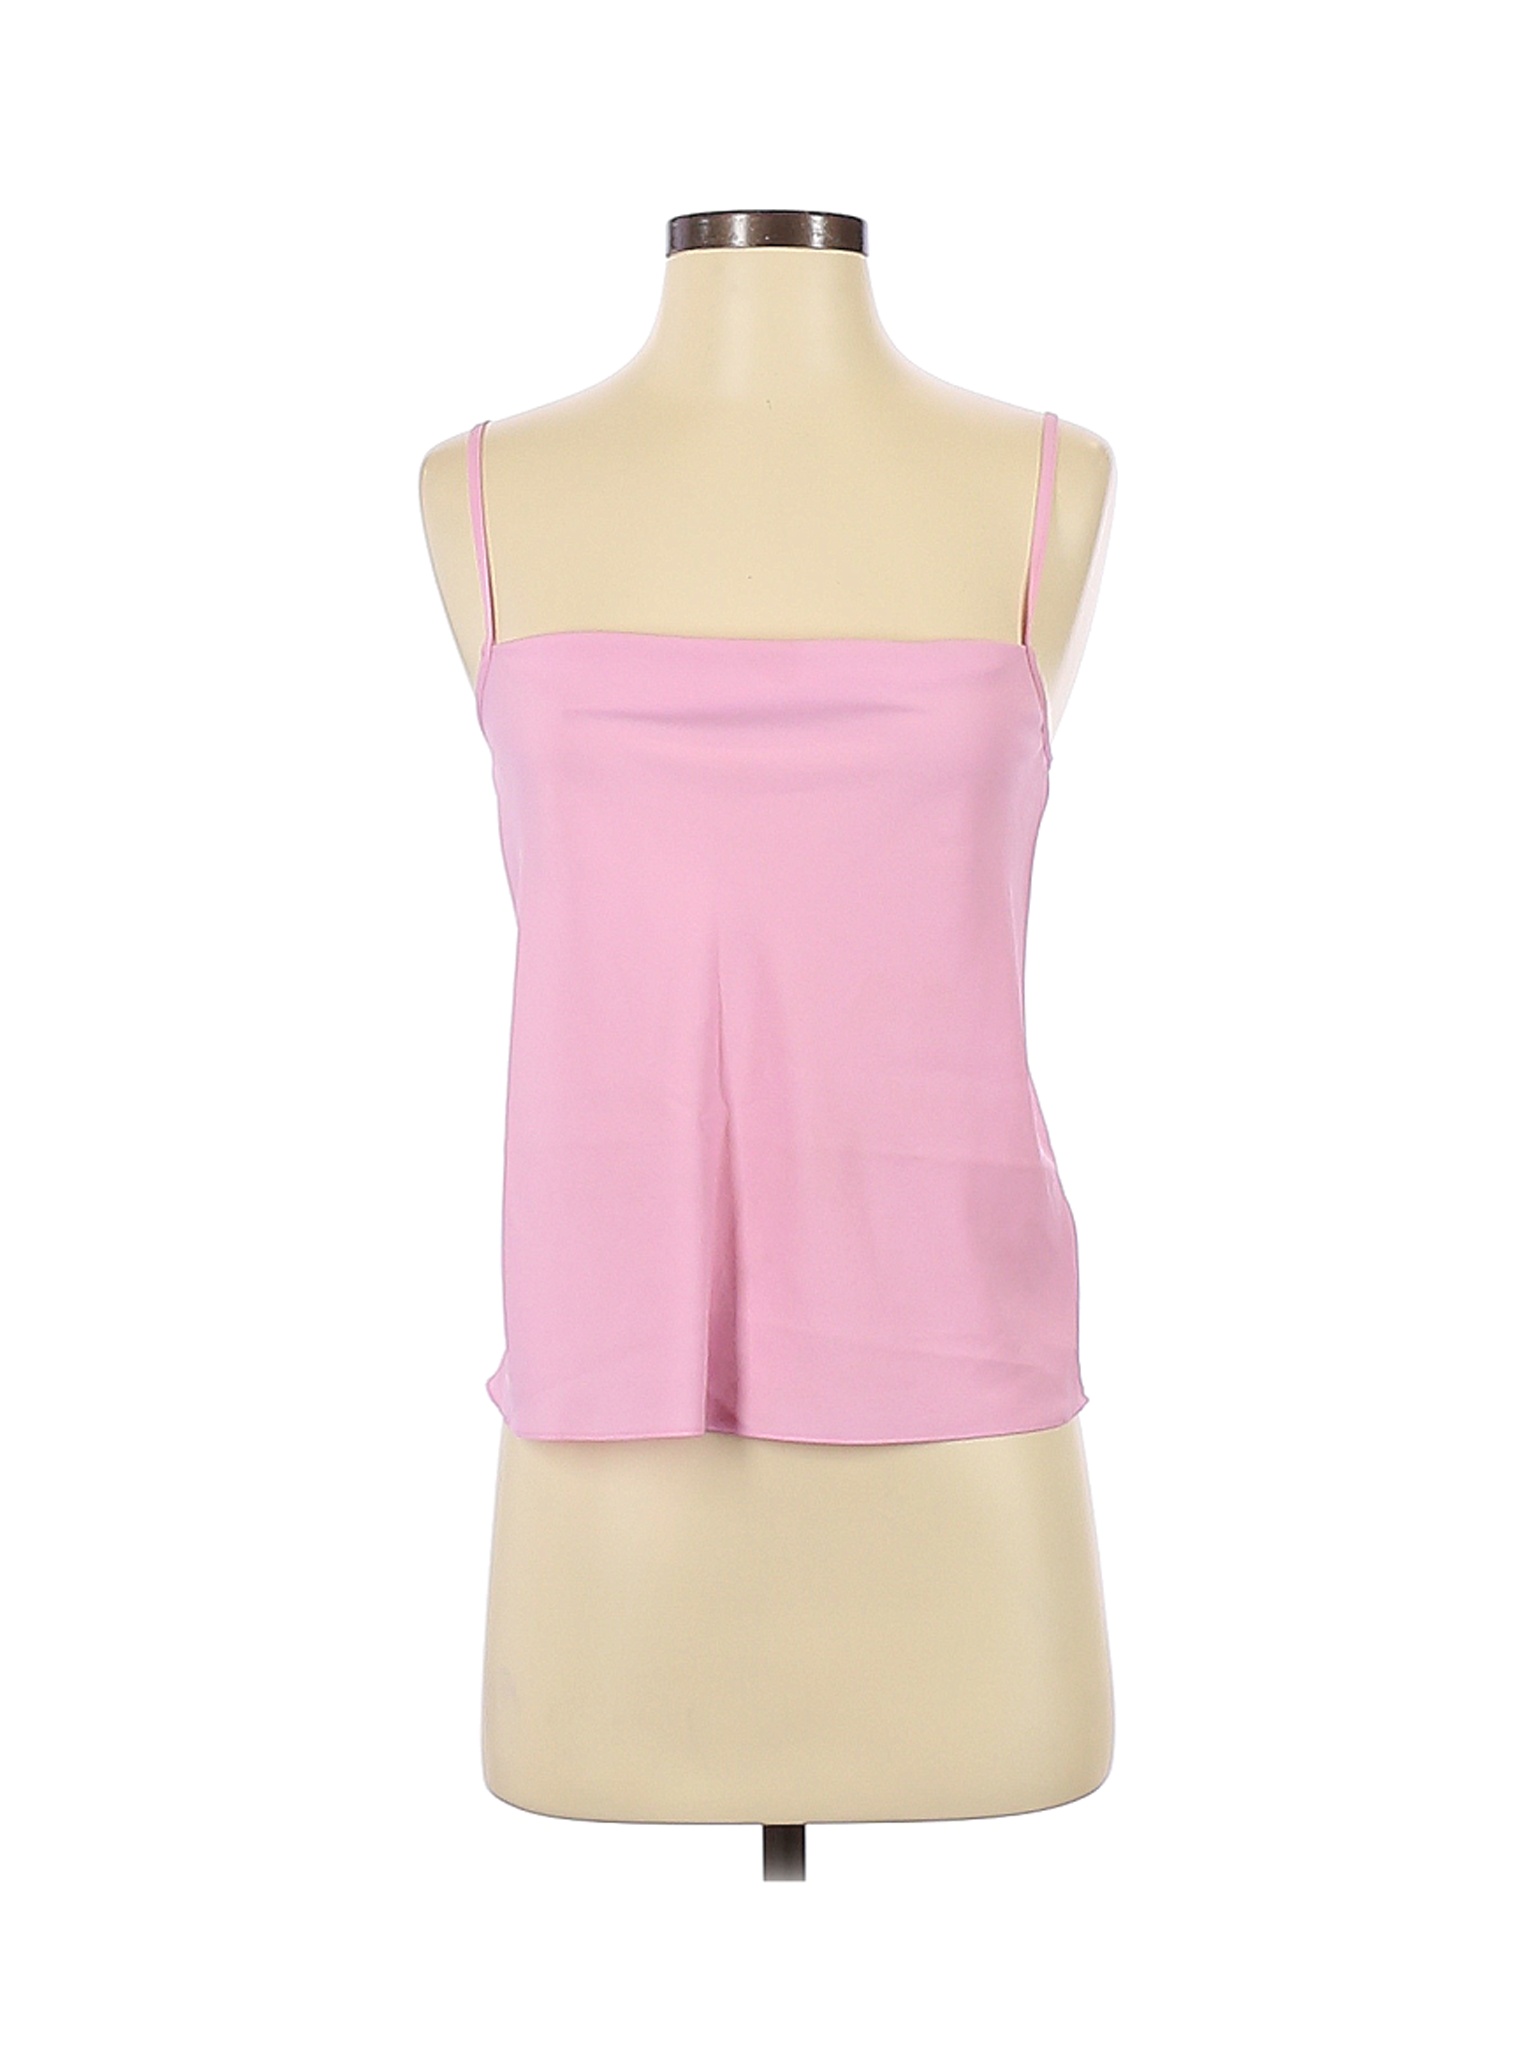 Topshop Women Pink Sleeveless Blouse 2 | eBay